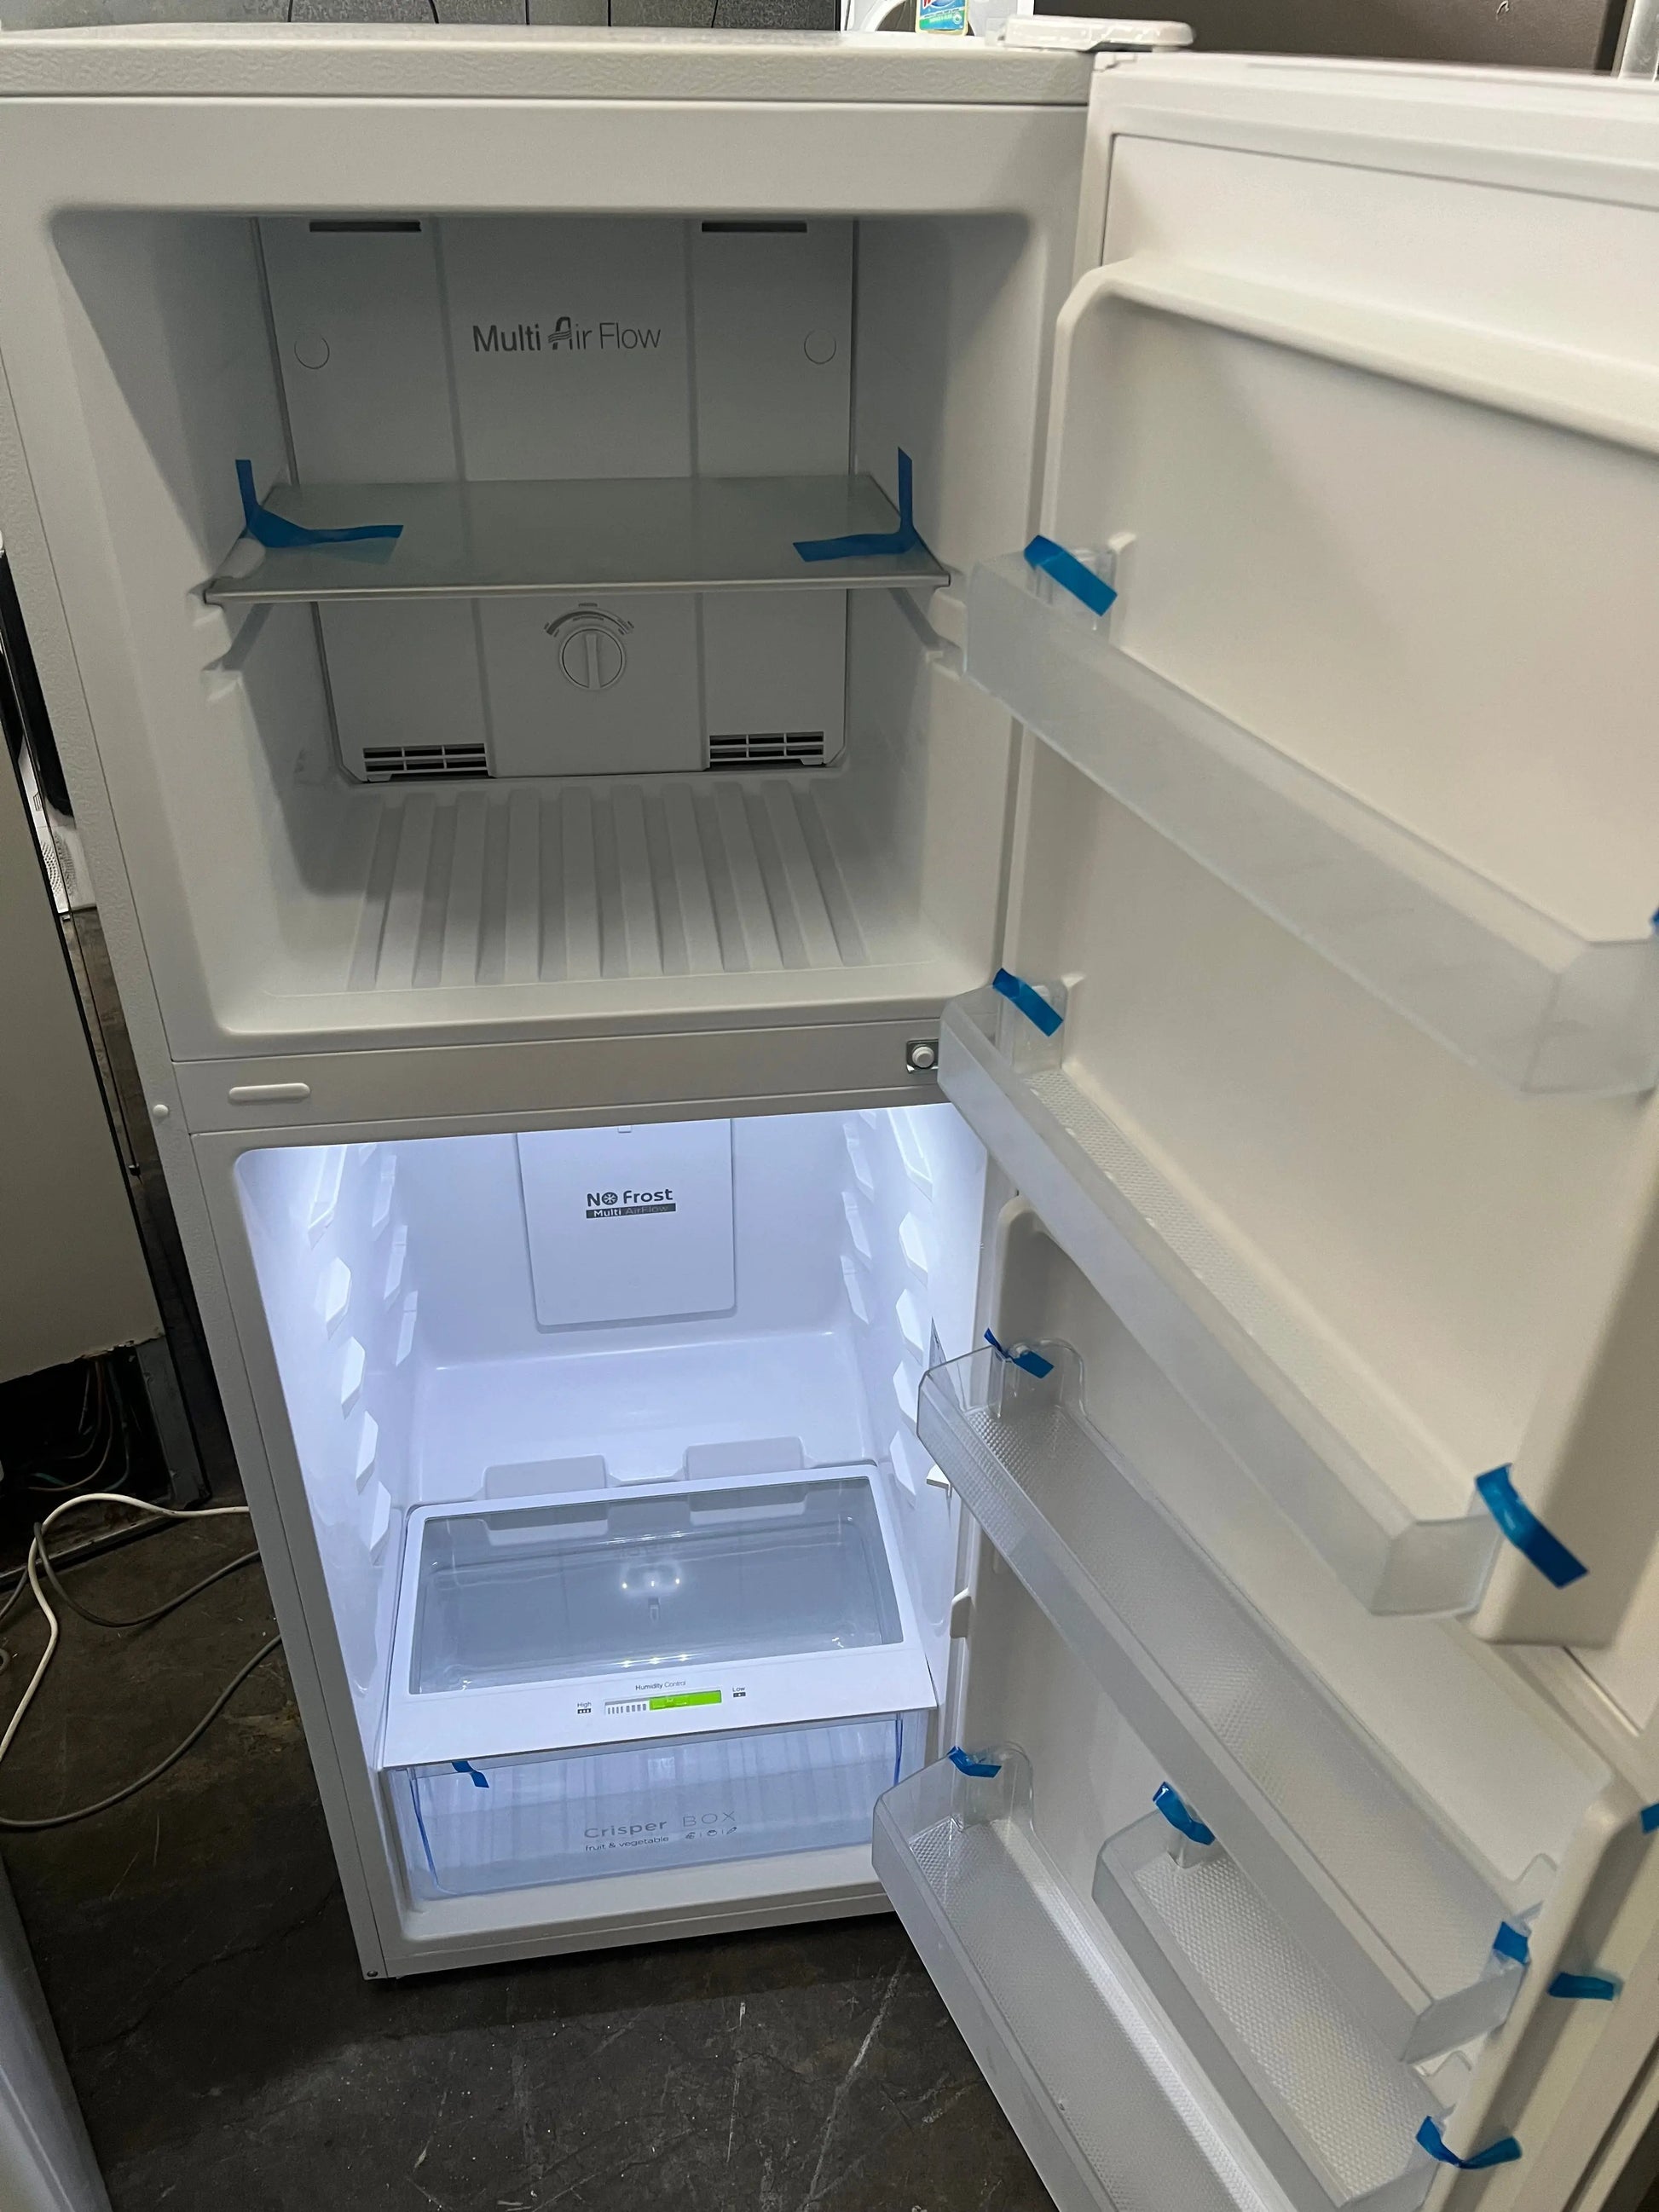 Chiq 202 litres fridge freezer | ADELAIDE